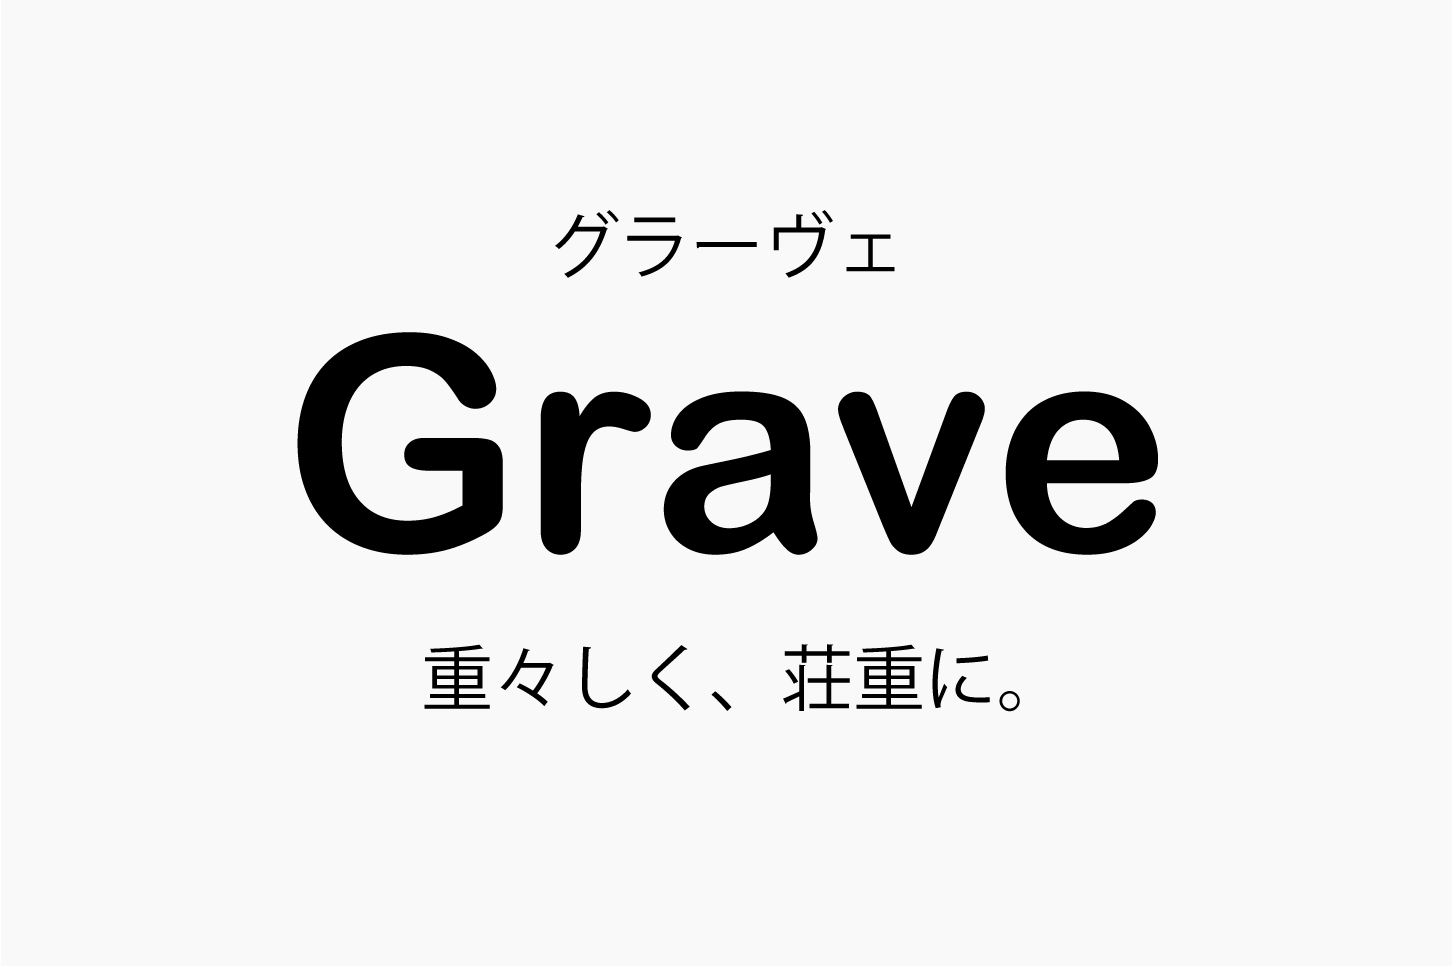 Grave（グラーヴェ）重々しく、荘重に。